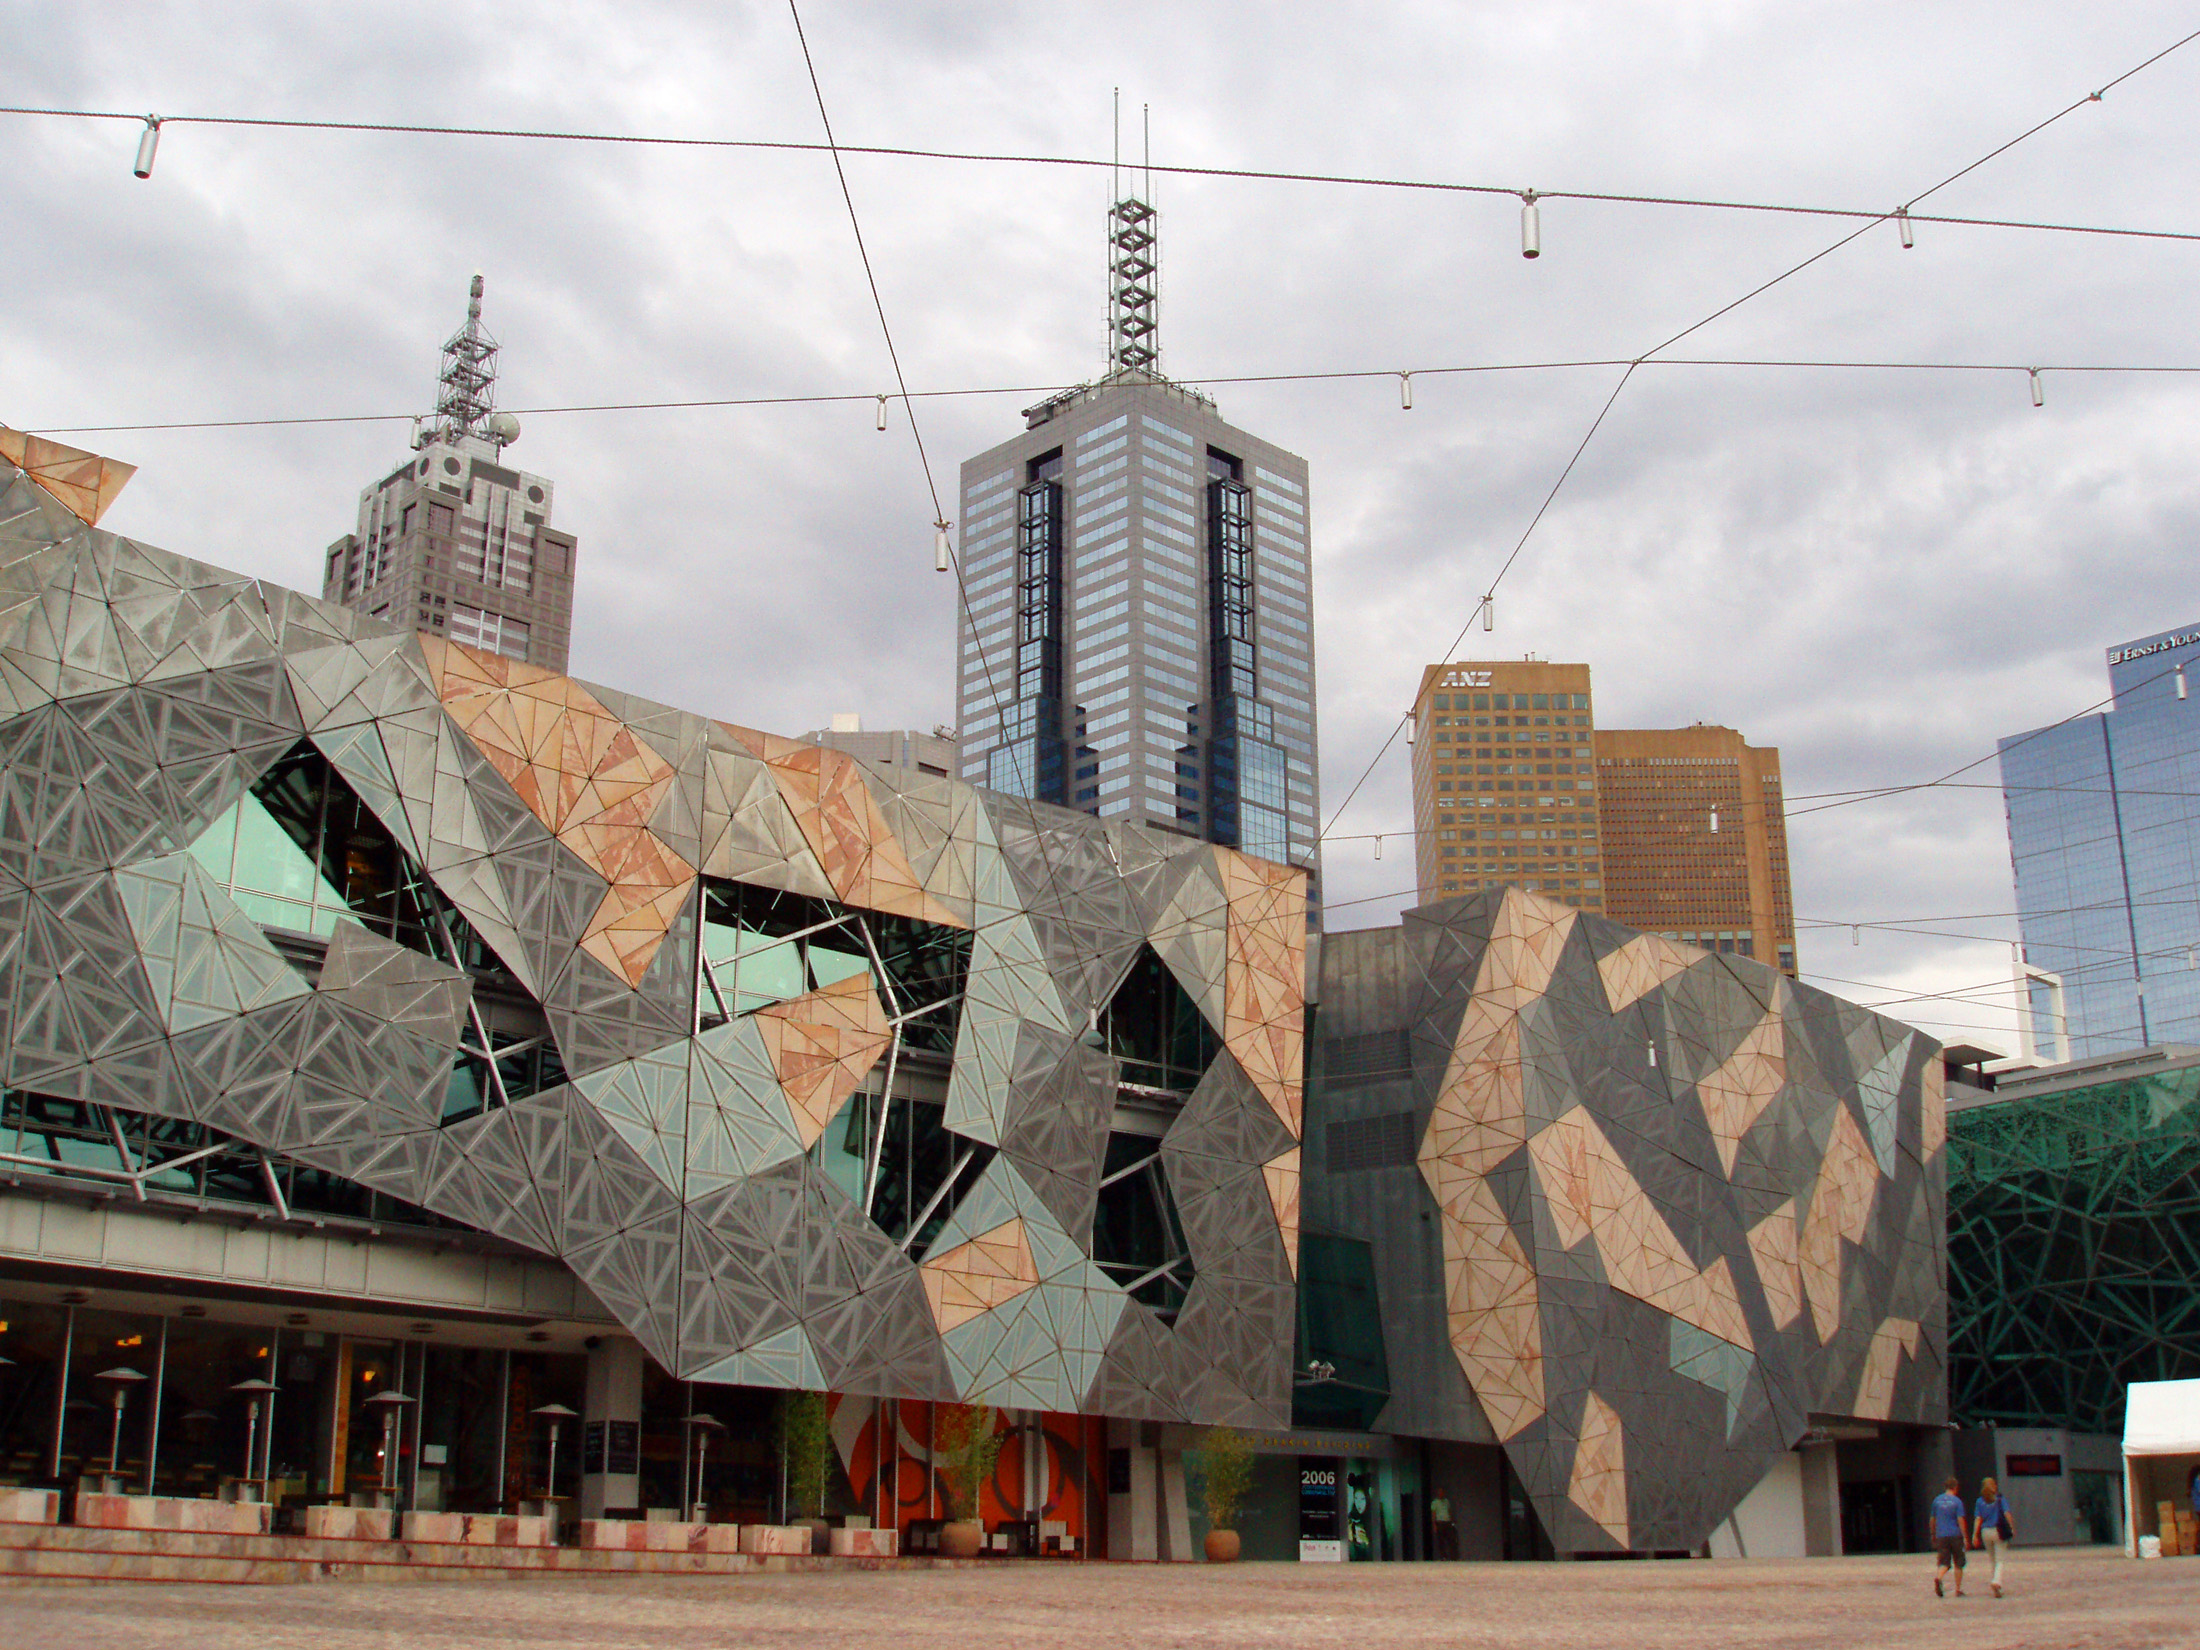 Amazing Federation Square Melbourne Australia Pictures & Backgrounds